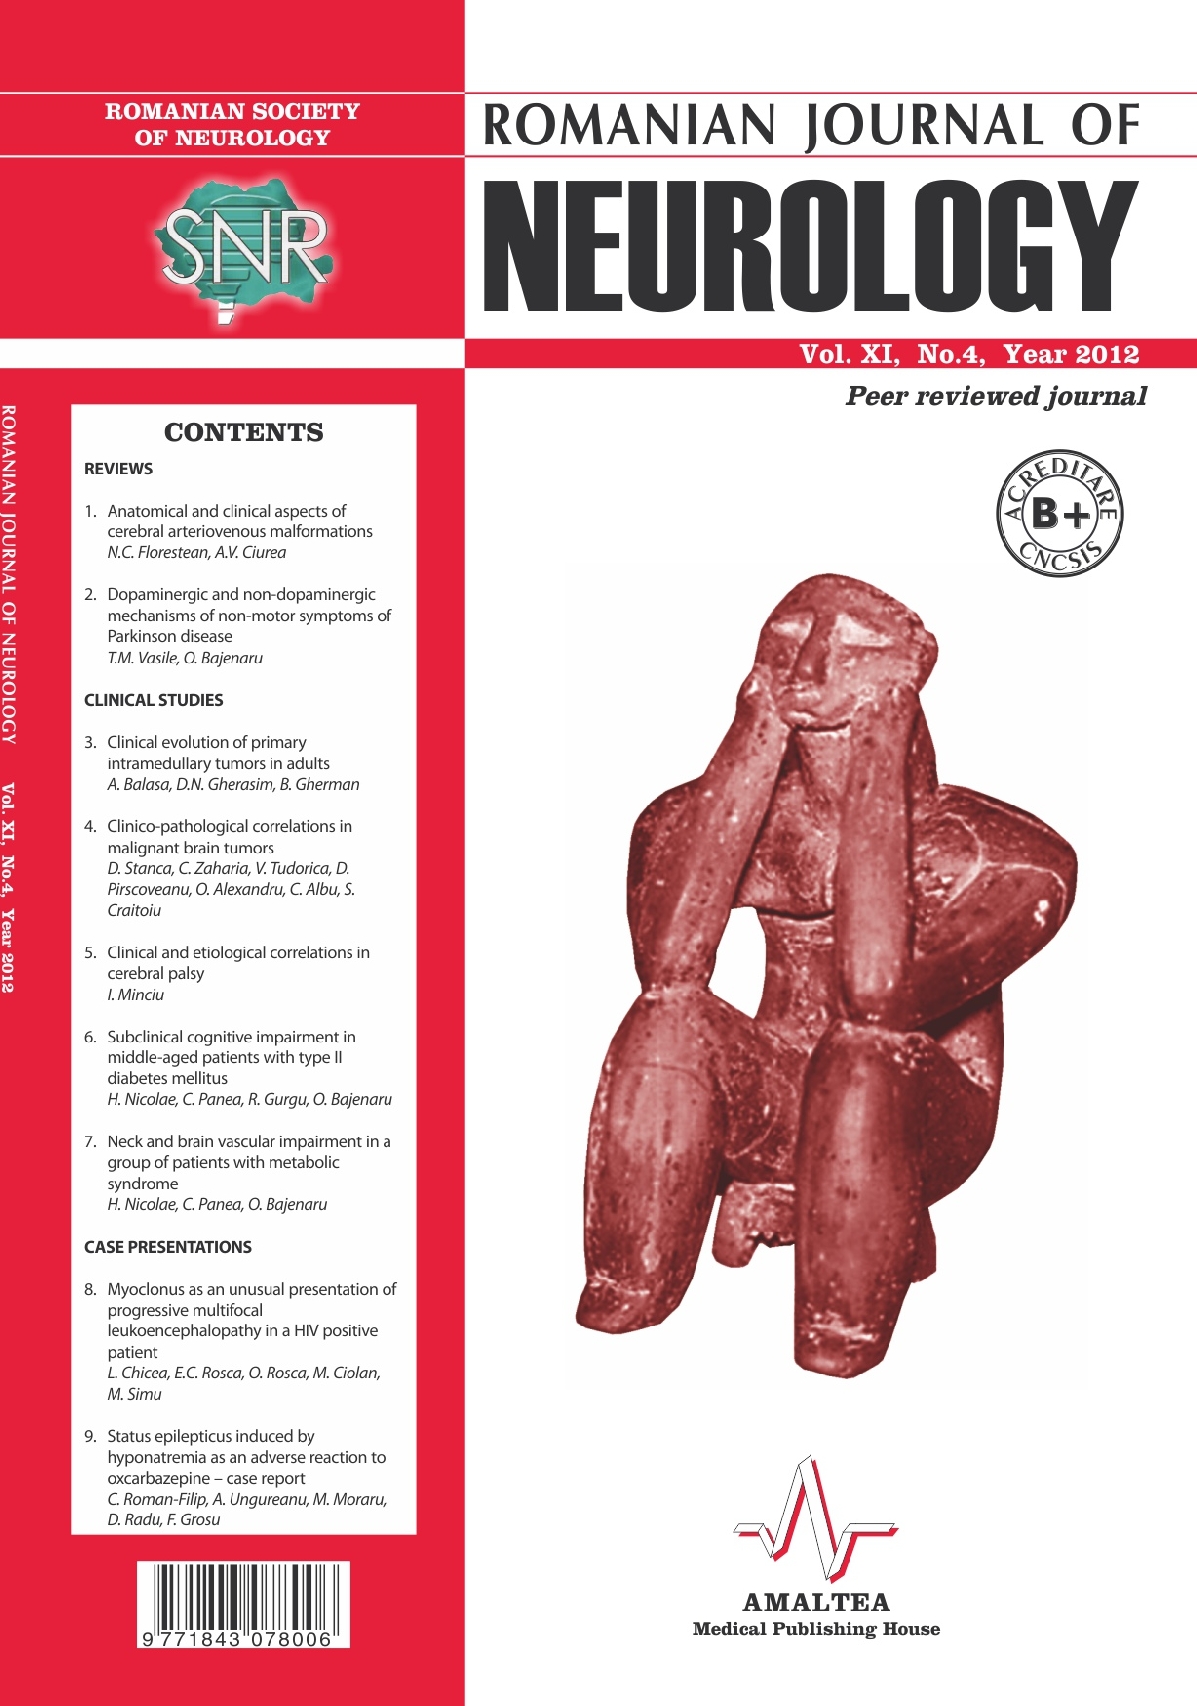 Romanian Journal of Neurology, Volume XI, No. 4, 2012